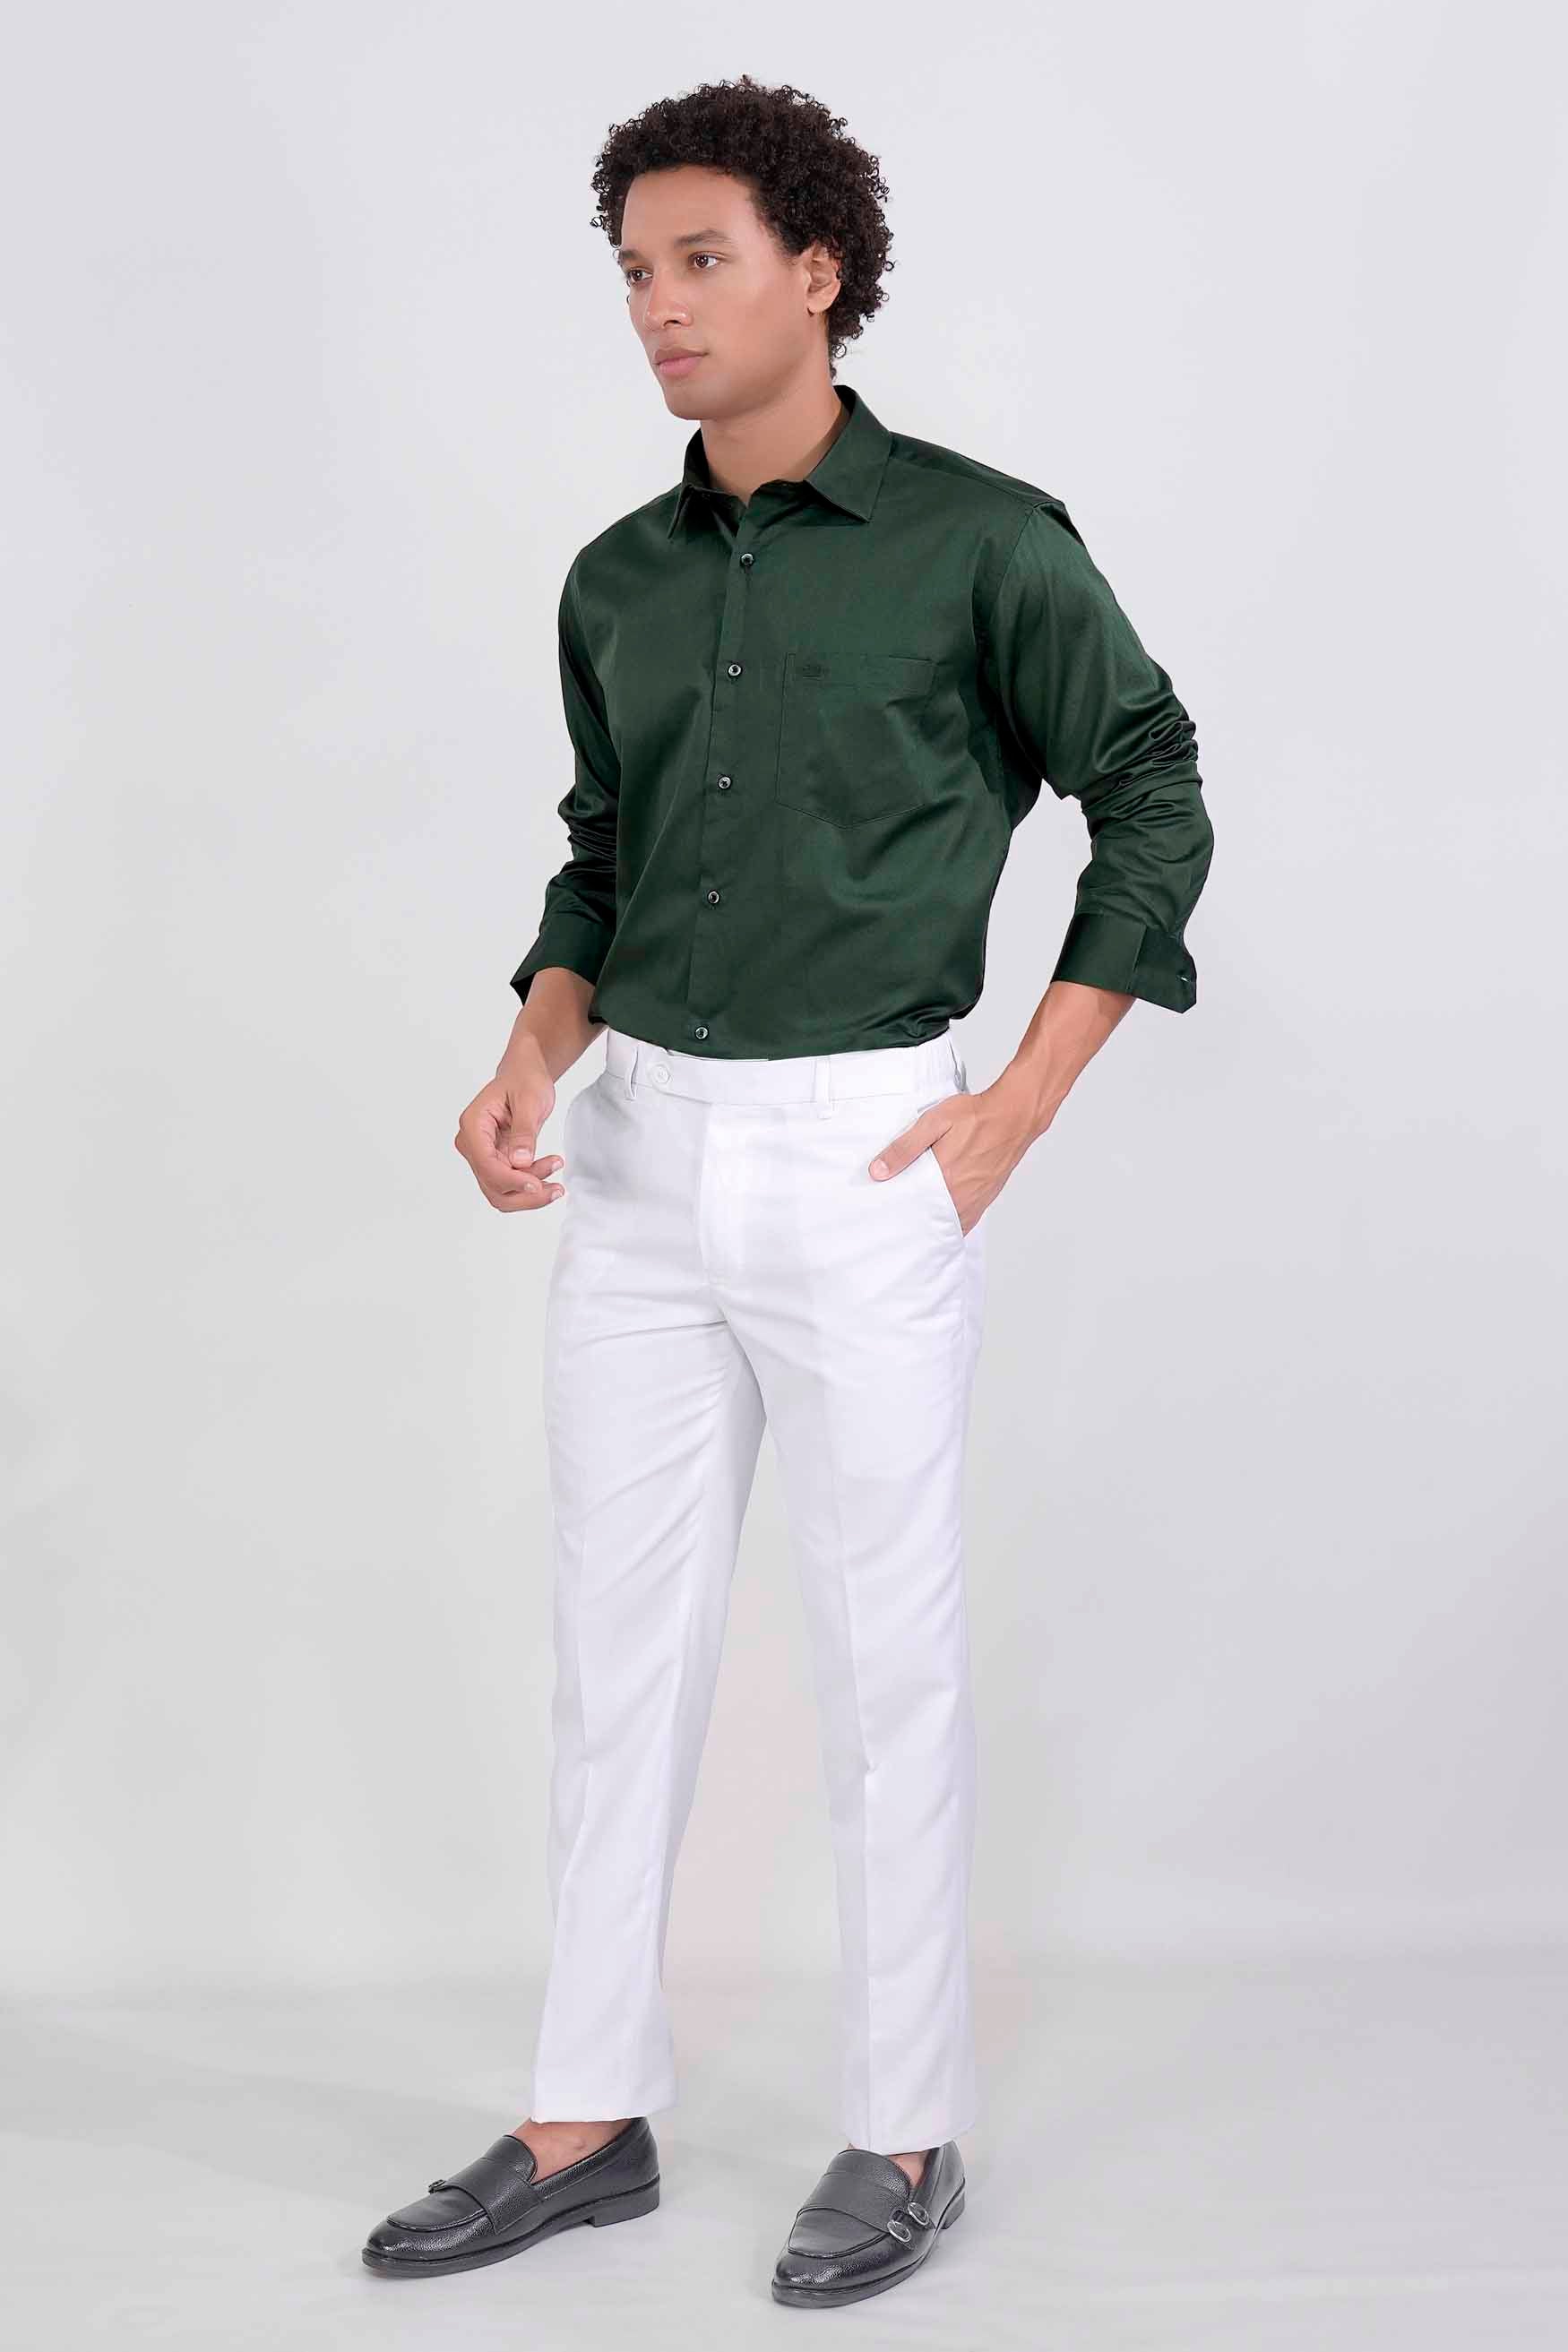 Everglade Green Subtle Sheen Super Soft Premium Cotton Shirt 11004-BLK-38, 11004-BLK-H-38, 11004-BLK-39, 11004-BLK-H-39, 11004-BLK-40, 11004-BLK-H-40, 11004-BLK-42, 11004-BLK-H-42, 11004-BLK-44, 11004-BLK-H-44, 11004-BLK-46, 11004-BLK-H-46, 11004-BLK-48, 11004-BLK-H-48, 11004-BLK-50, 11004-BLK-H-50, 11004-BLK-52, 11004-BLK-H-52